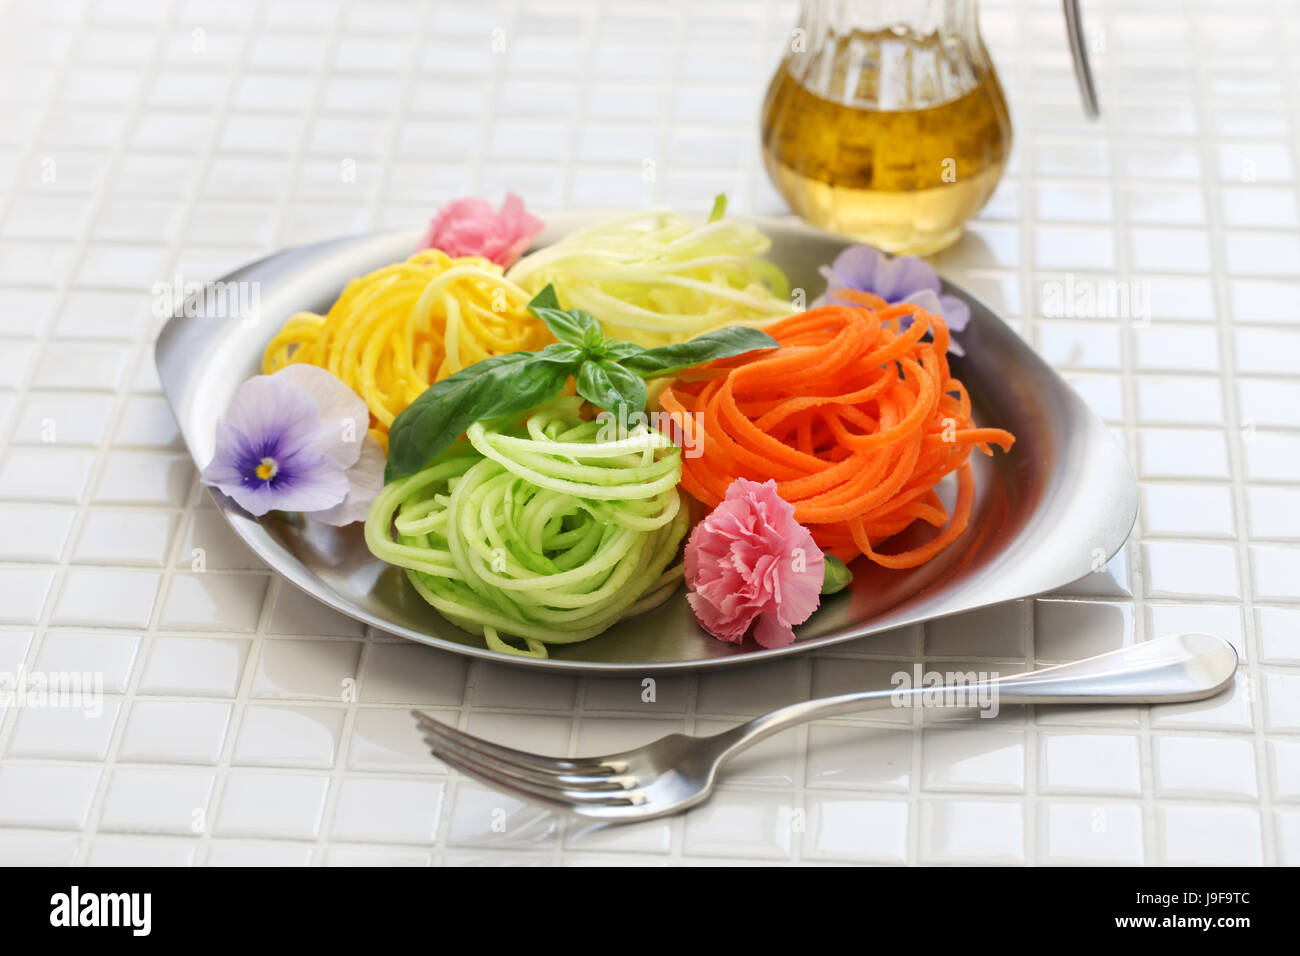 healthy diet vegetable noodles salad, vegetarian food Stock Photo